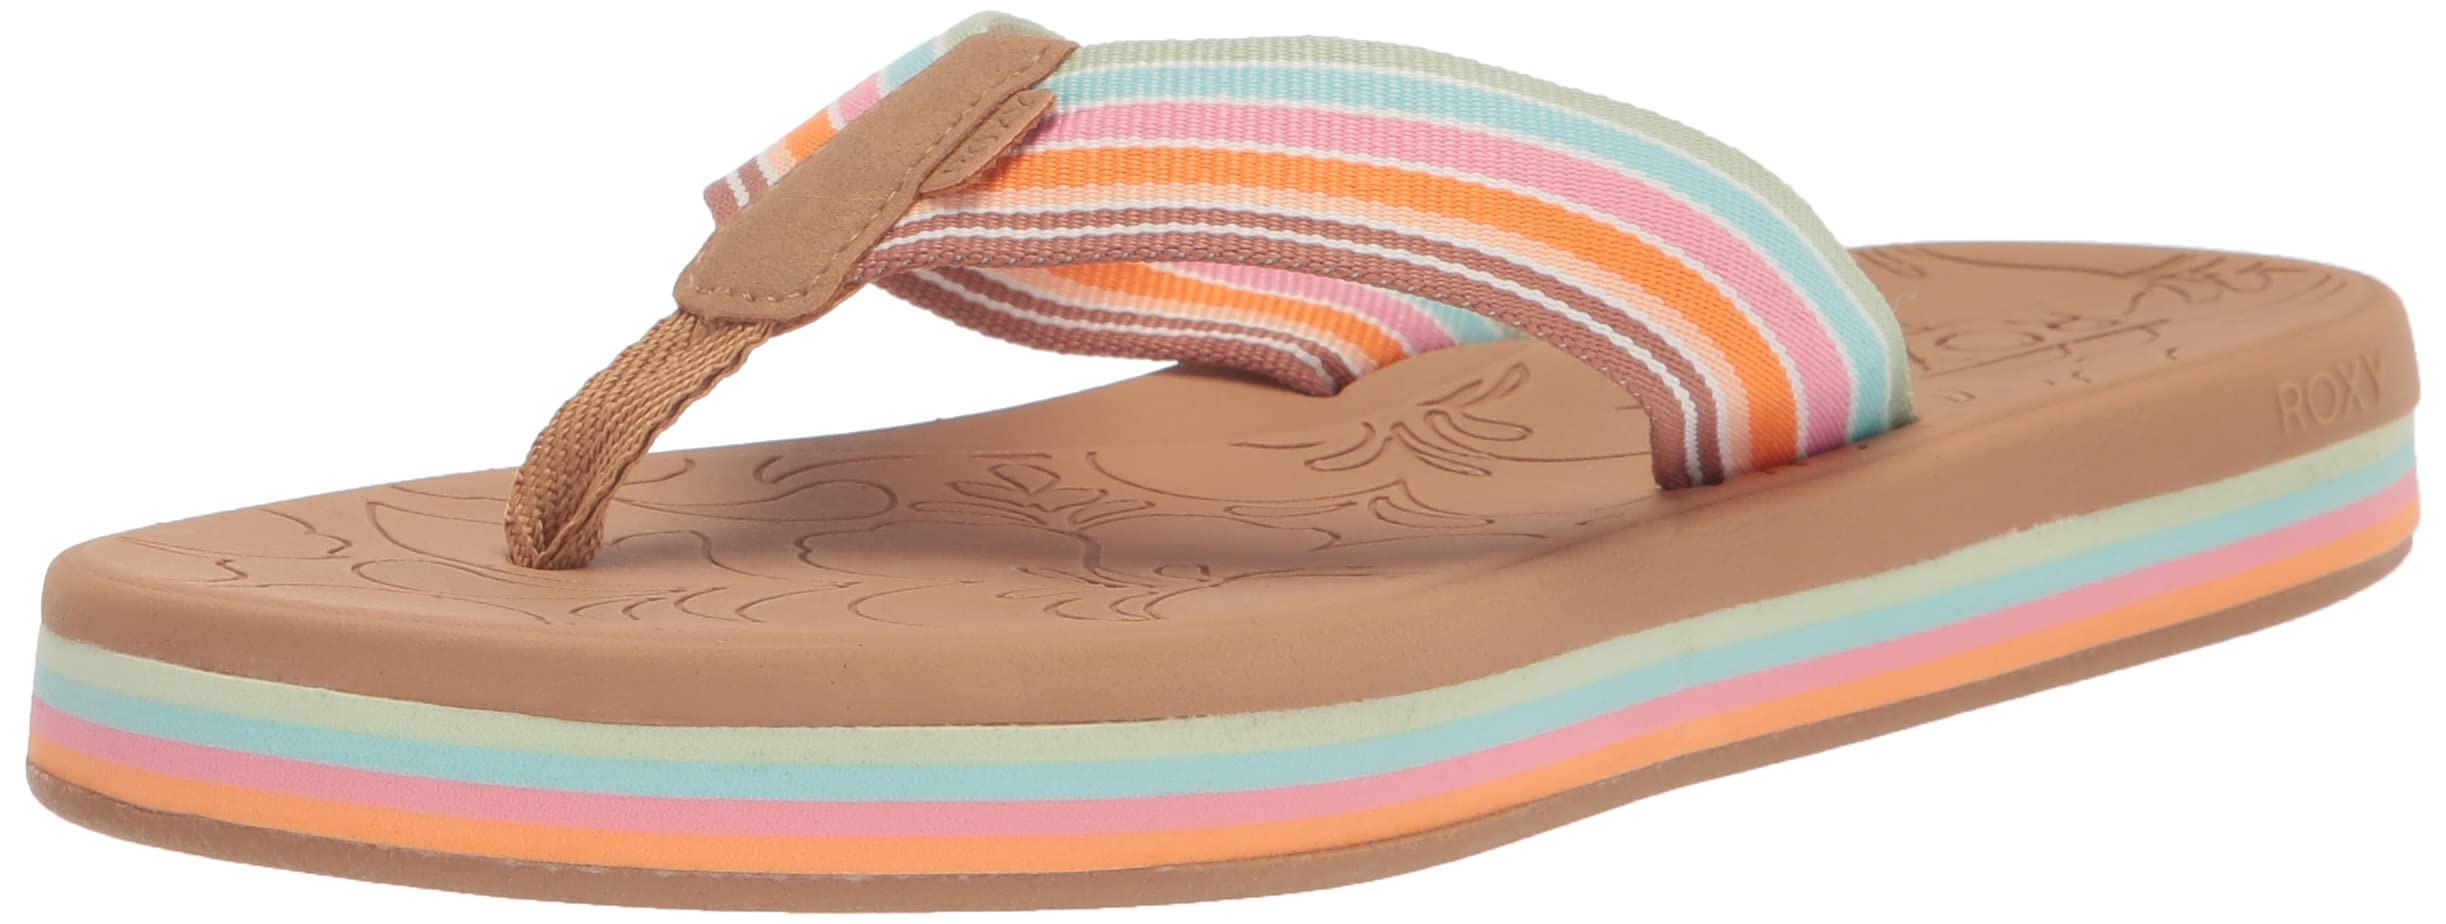 Roxy Colbee Hi Sandals White/Orange/Pink 10 M - 41 EU